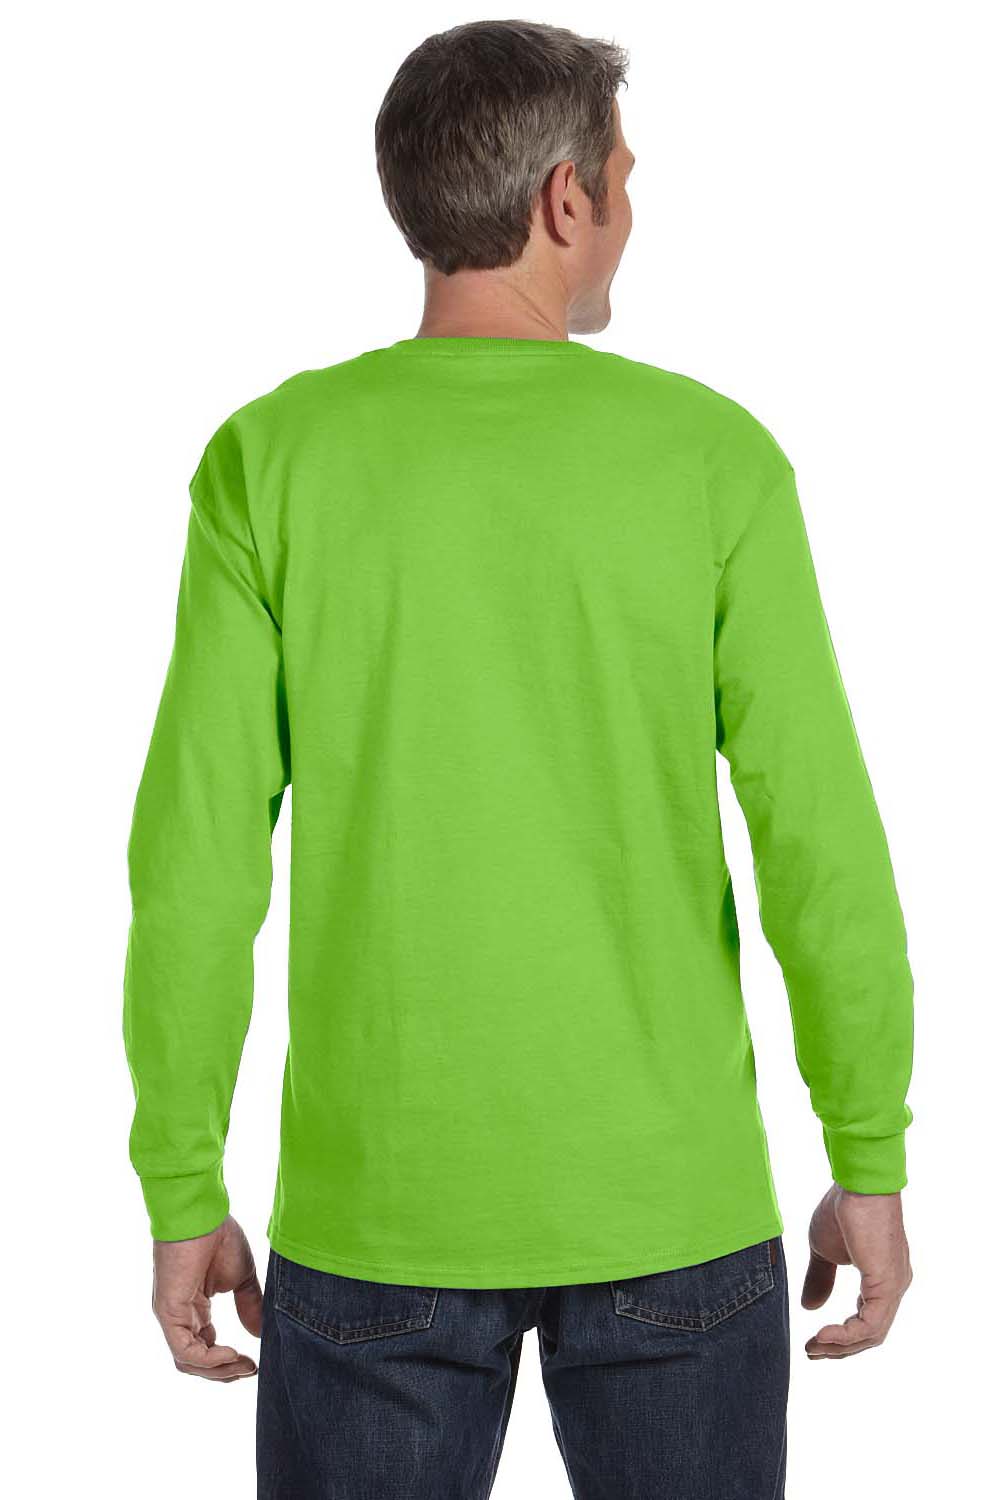 Hanes 5586 Mens ComfortSoft Long Sleeve Crewneck T-Shirt Lime Green Back